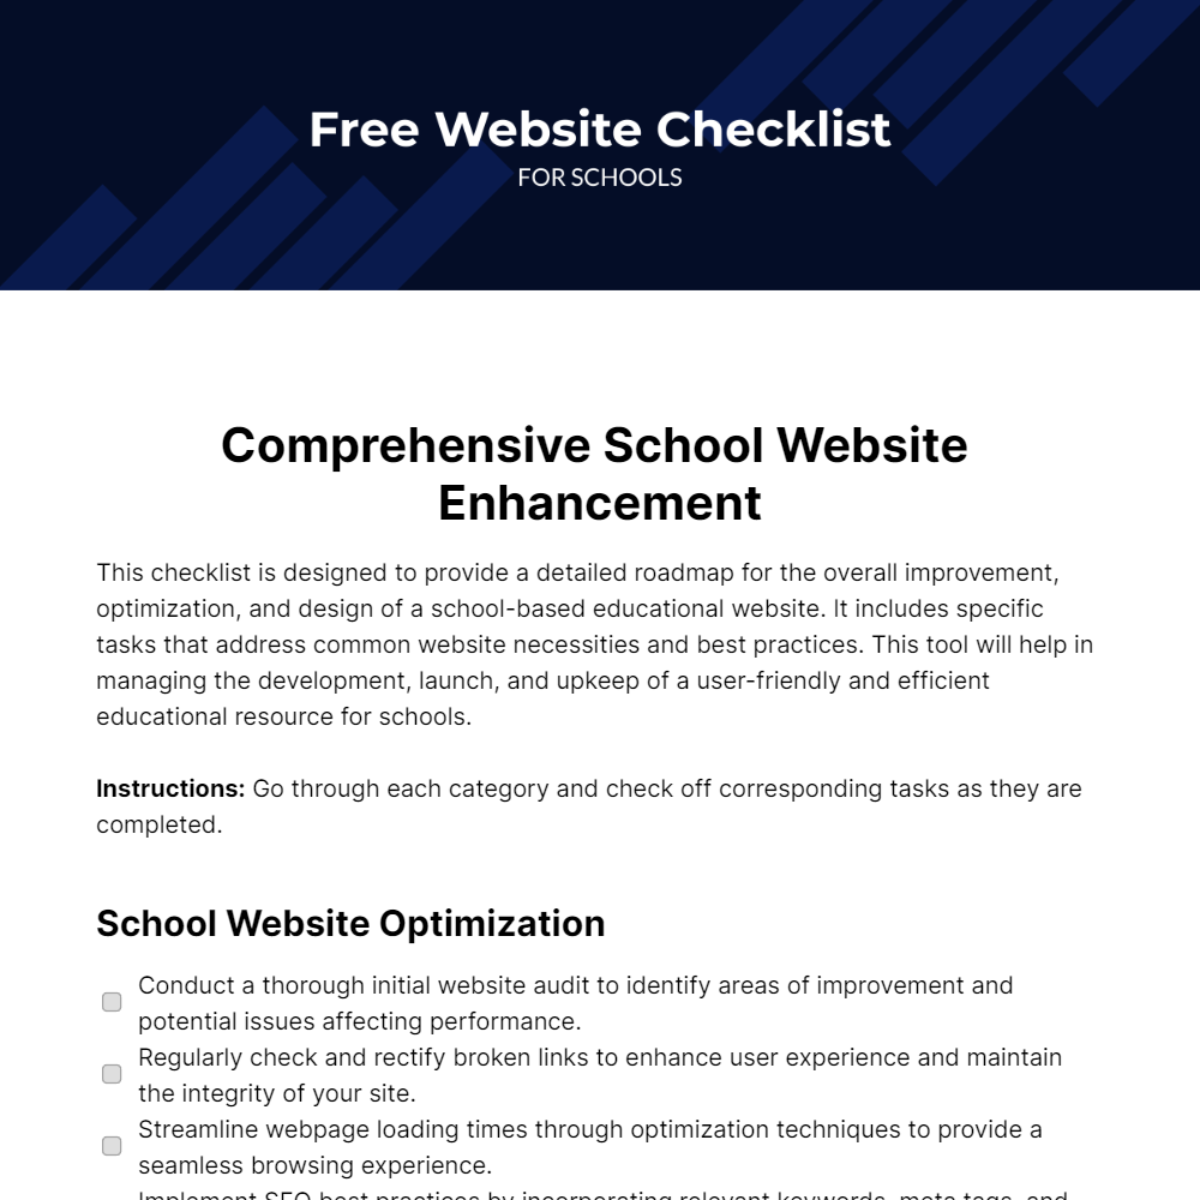 Free Website Checklist for Schools Template